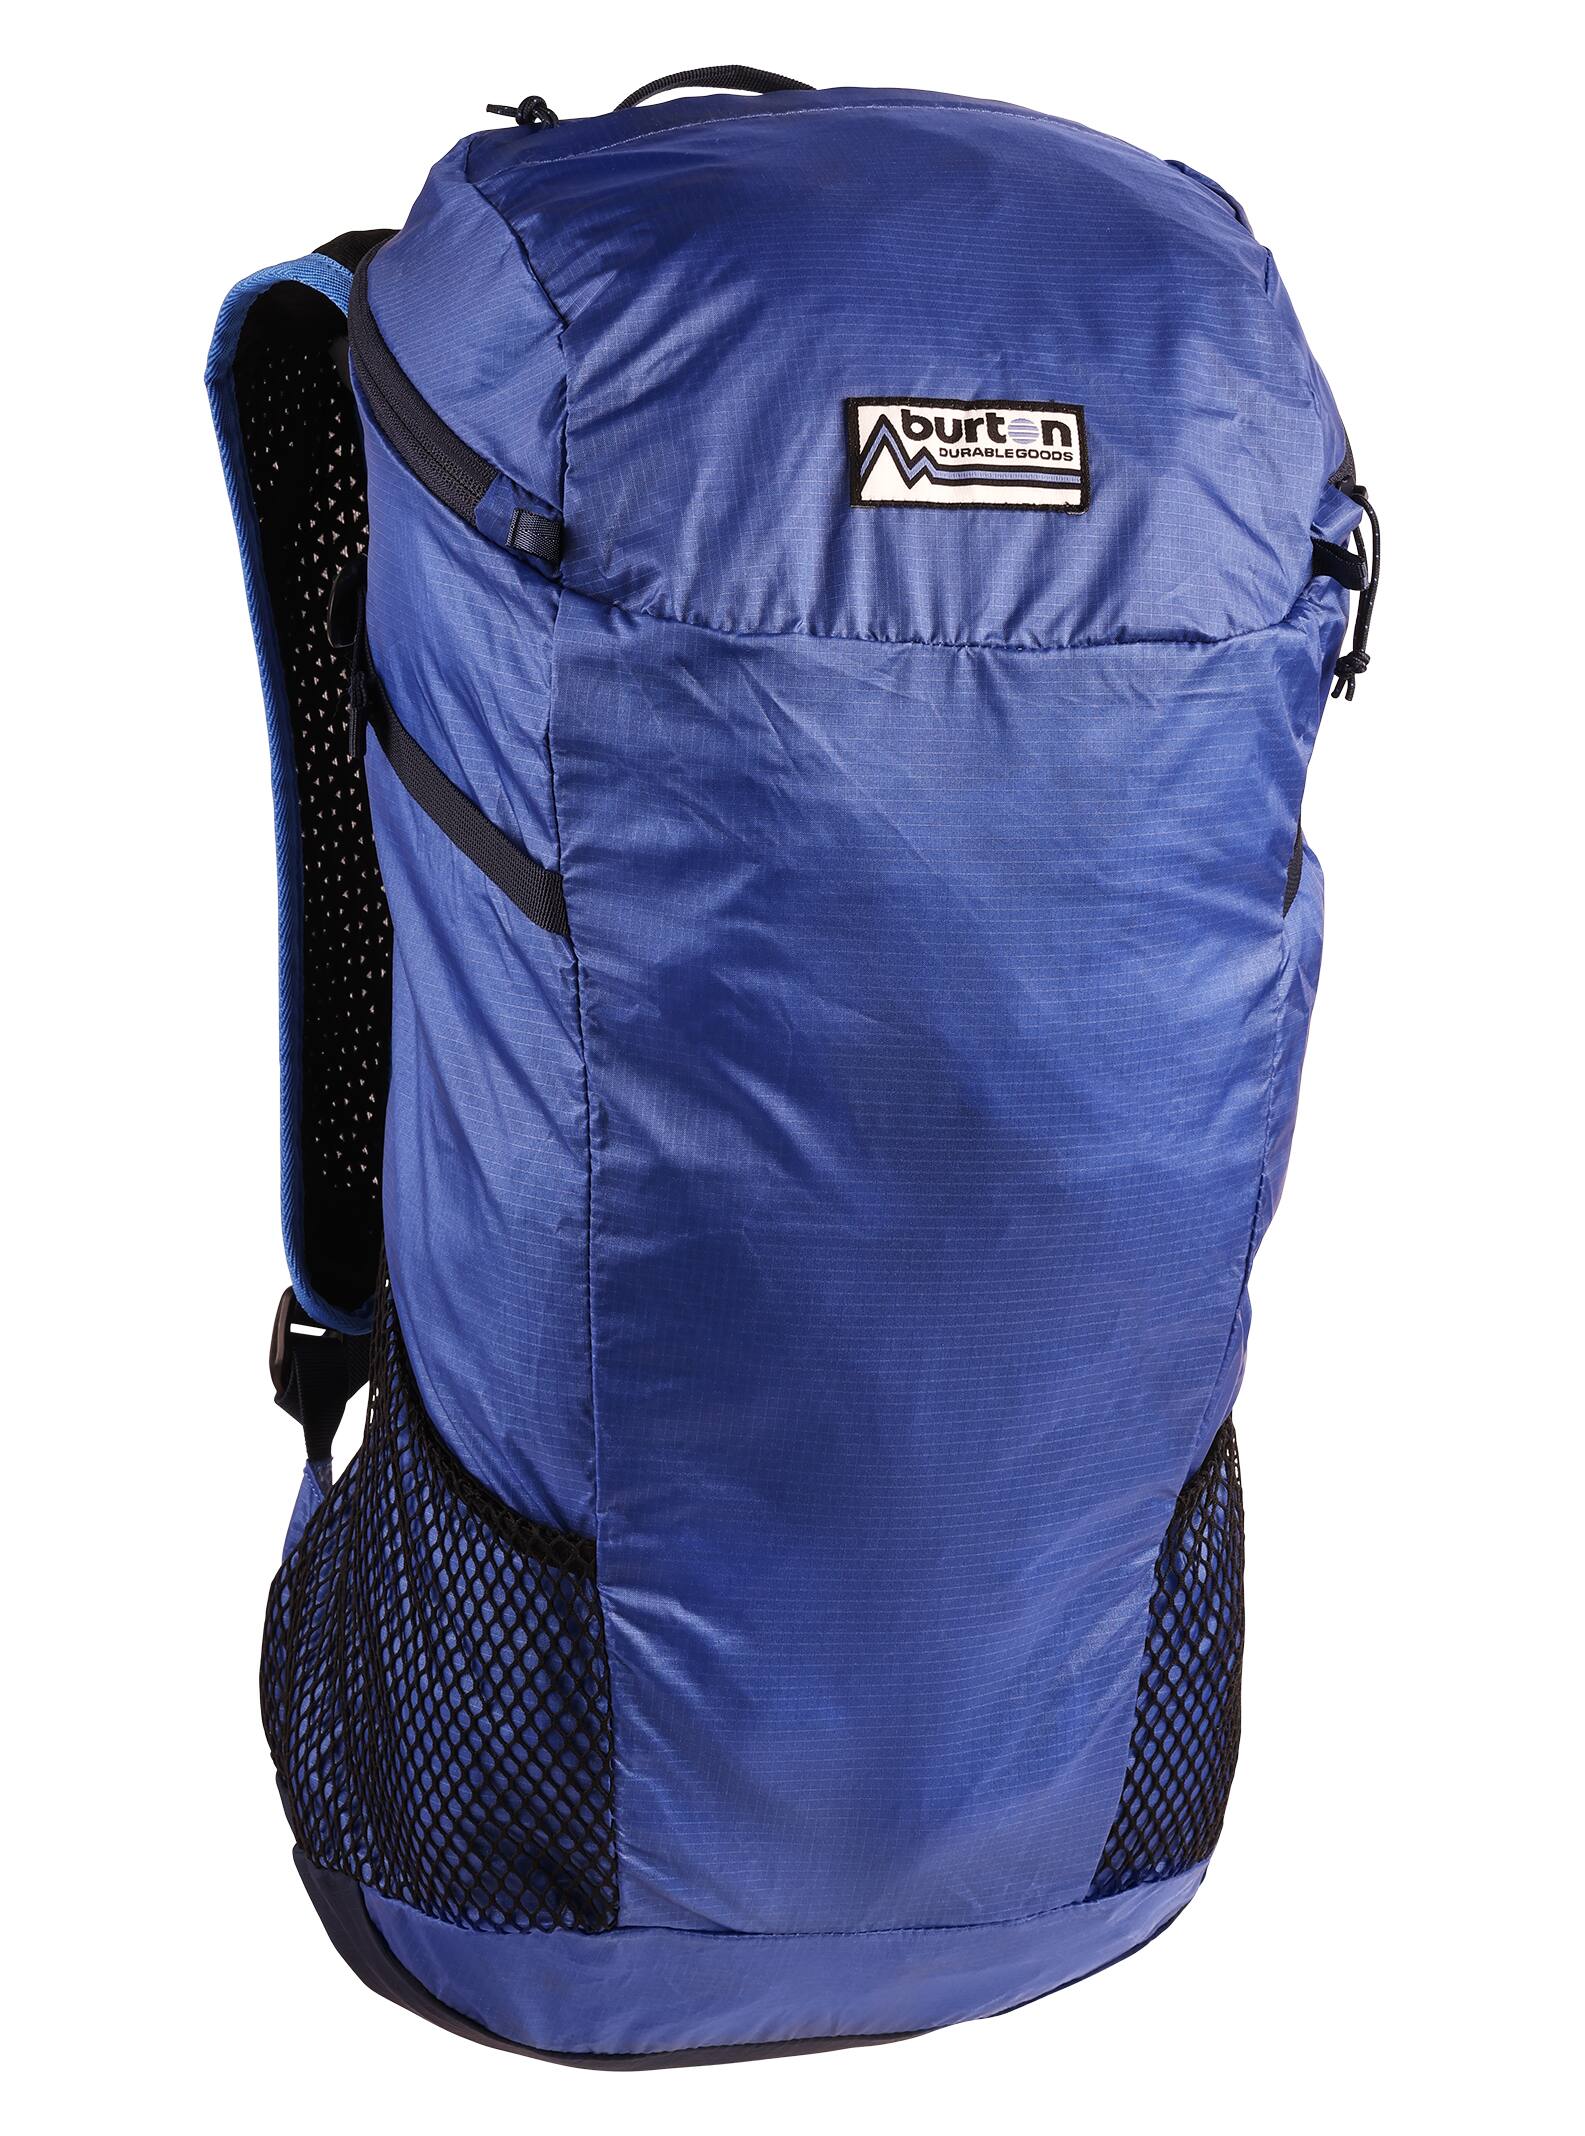 Burton Skyward 25L Packable Backpack | Burton.com Spring 2022 US